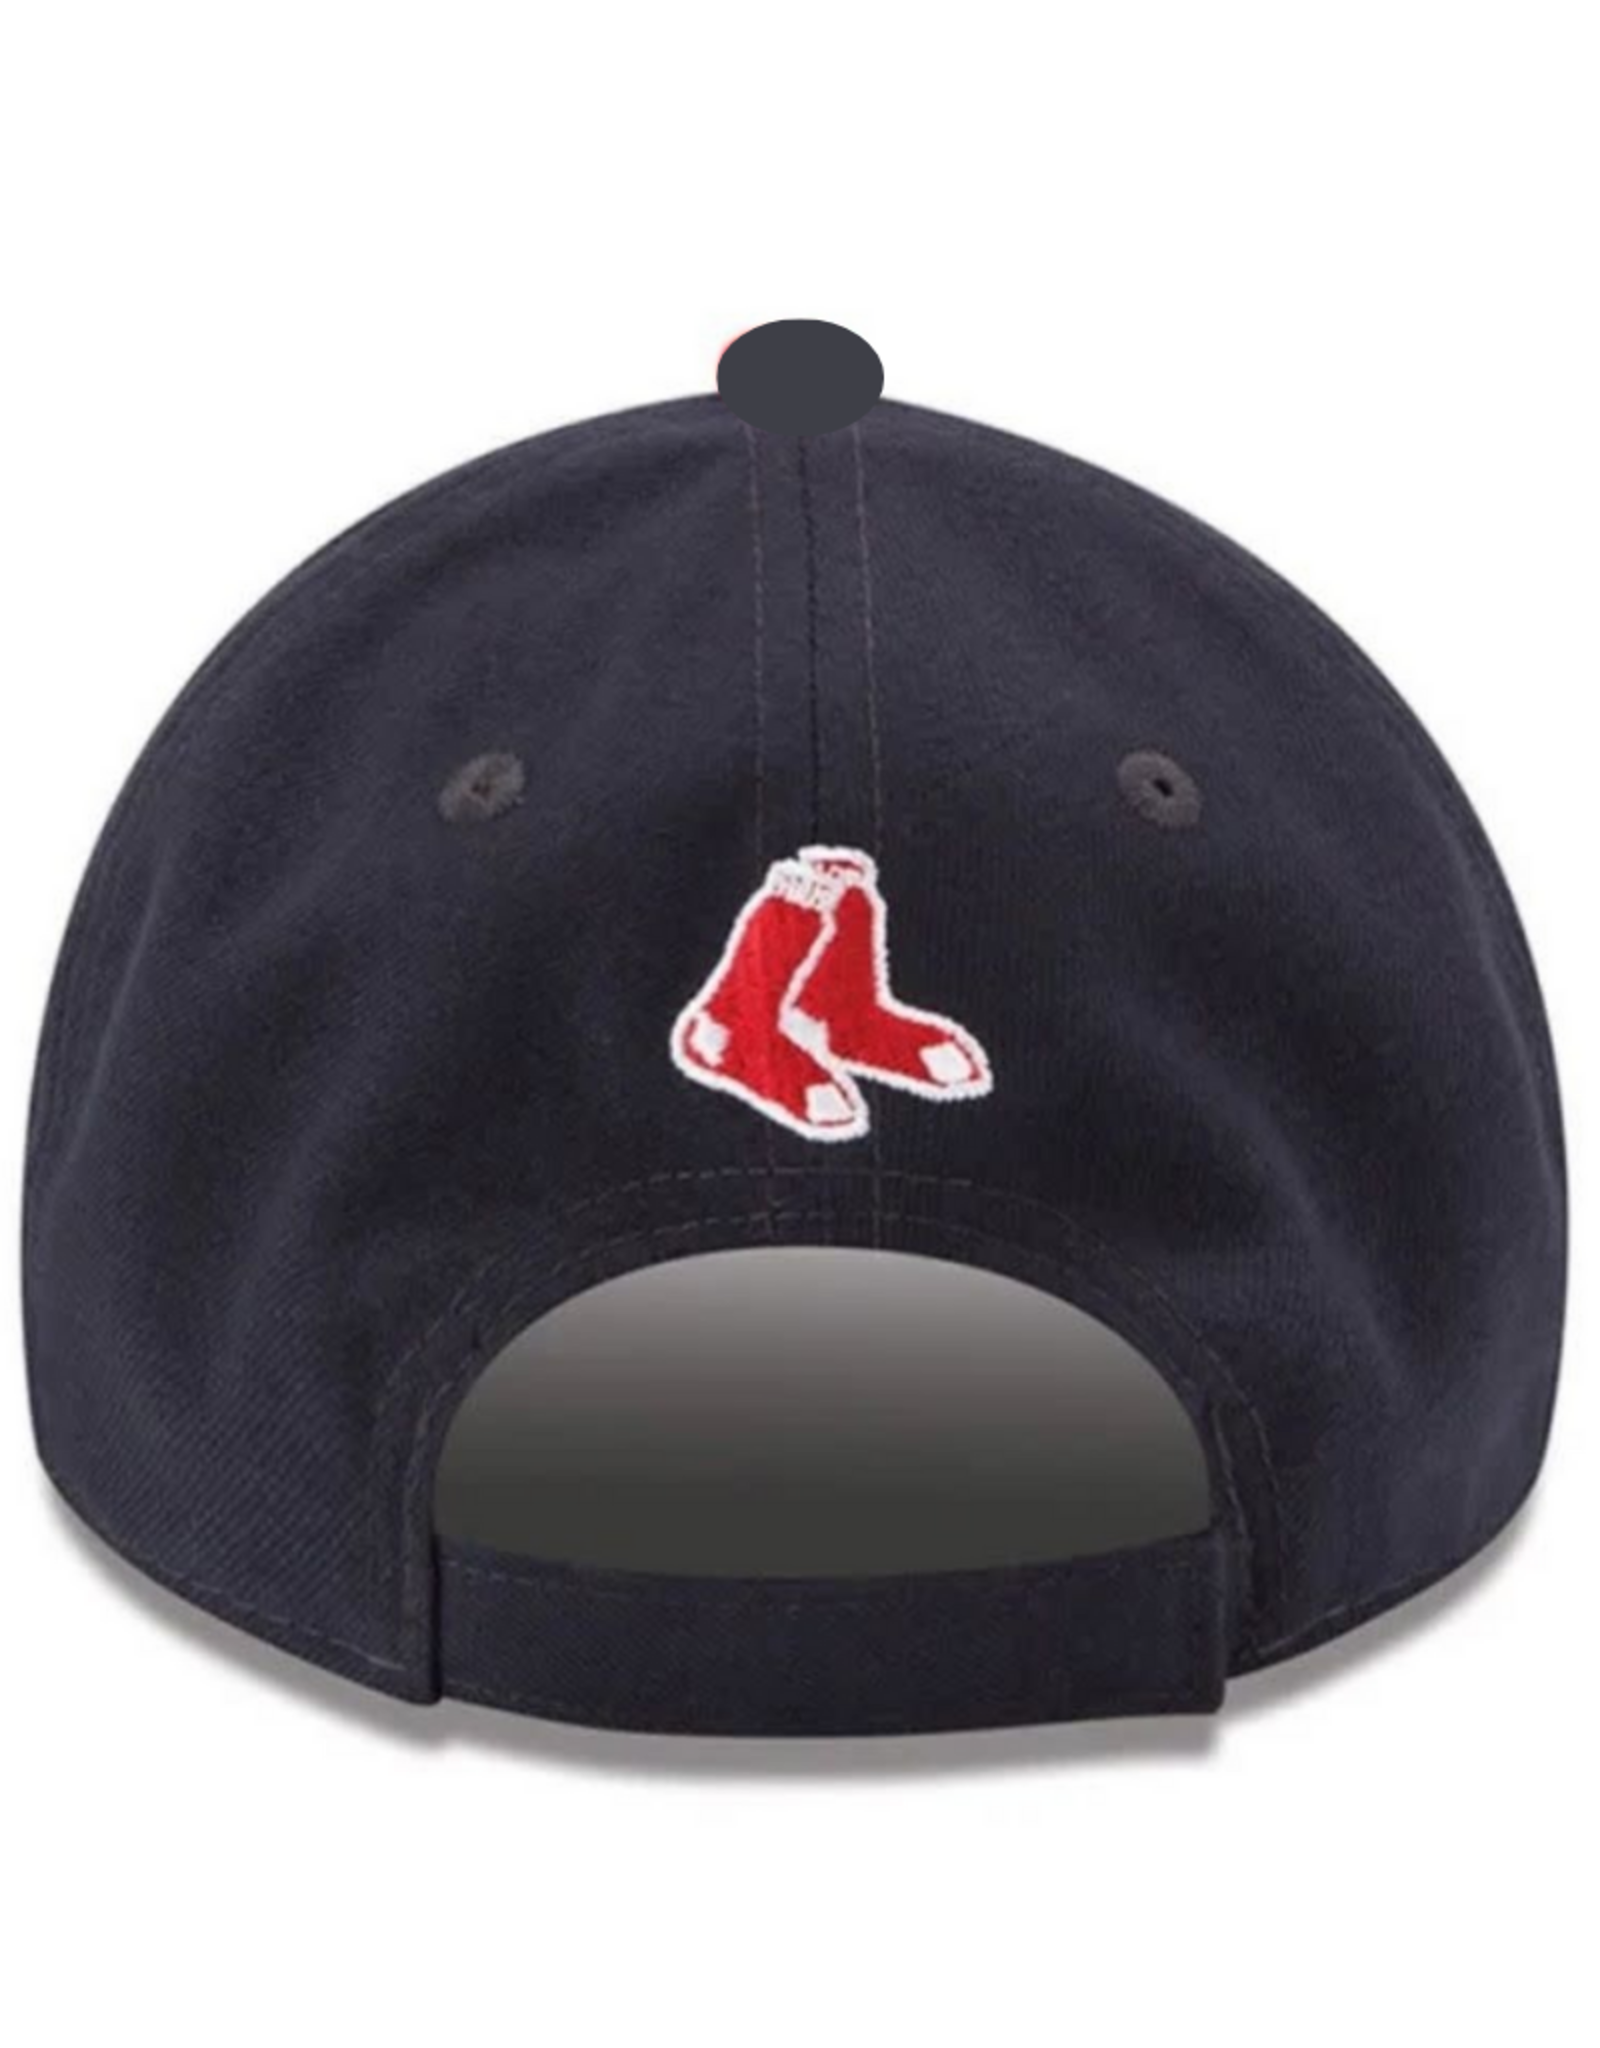 New Era Men's The League Adjustable Hat Boston Red Sox Navy